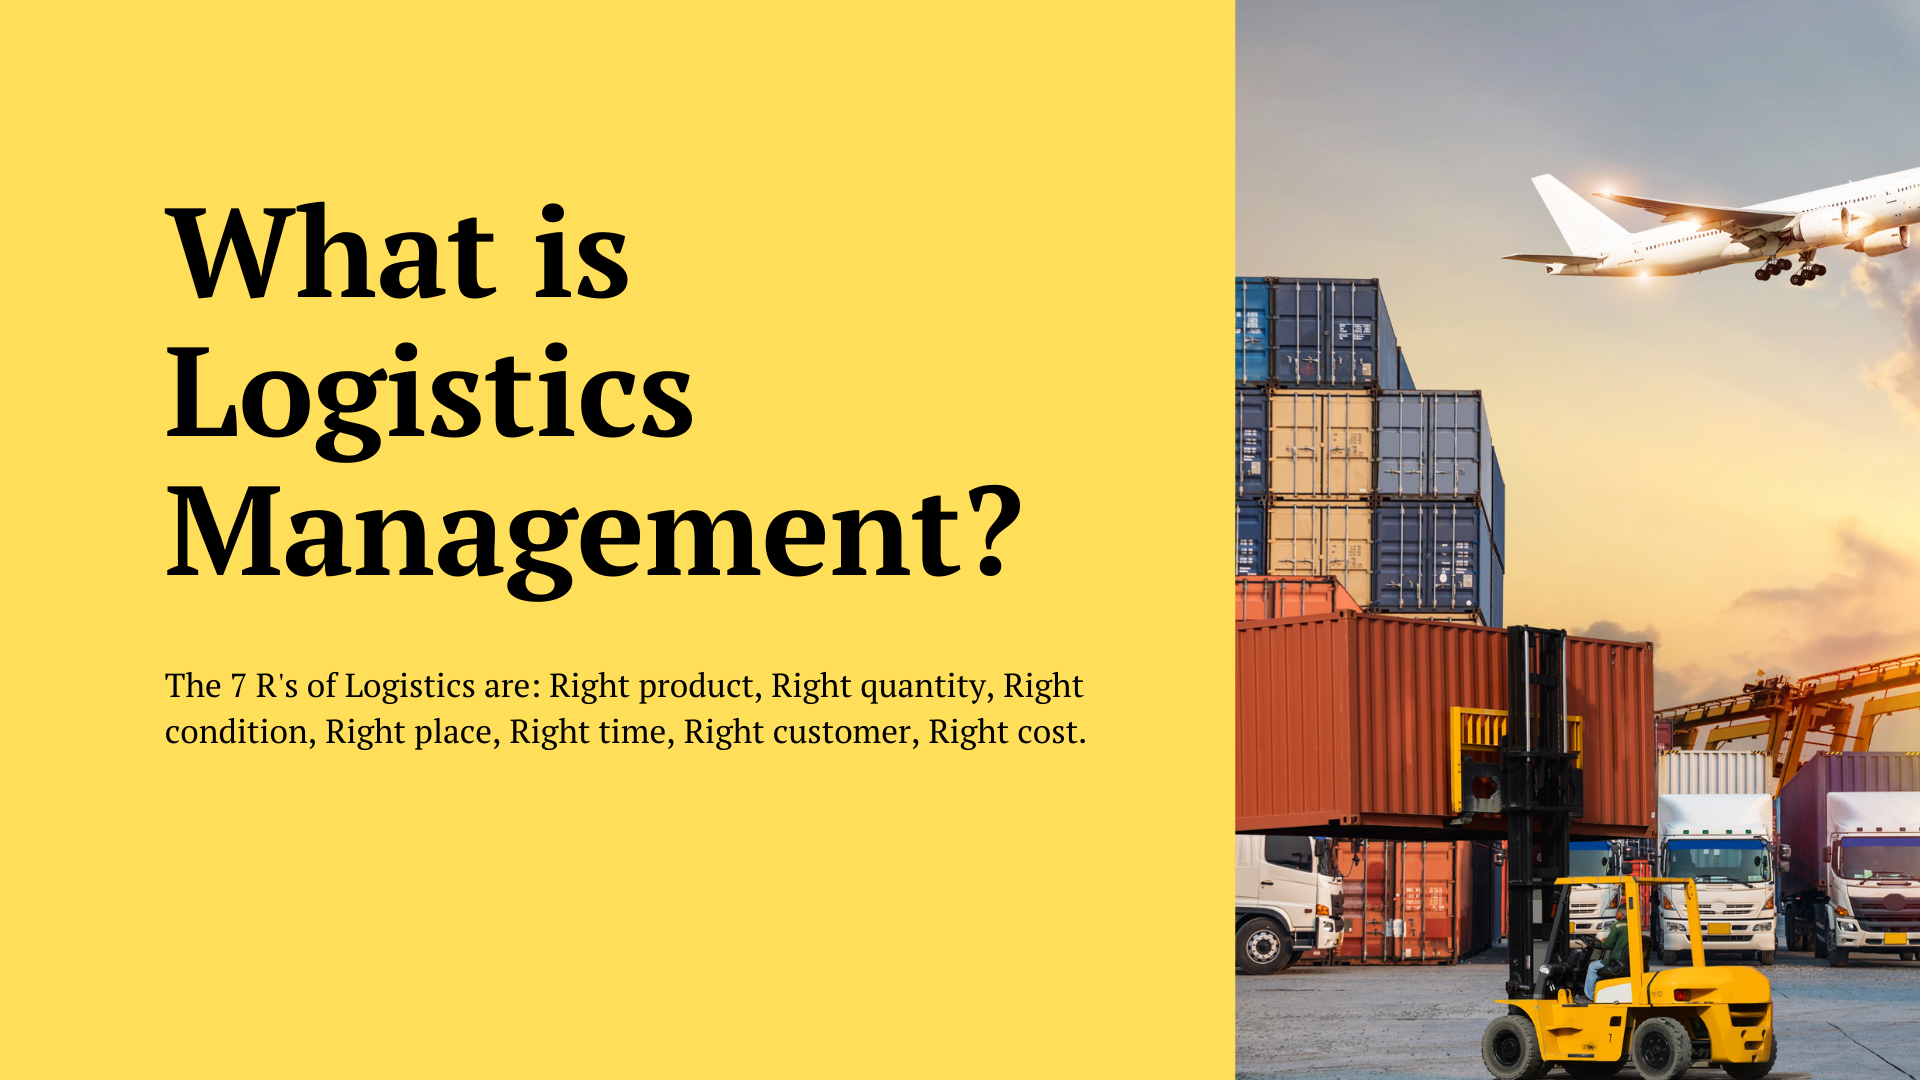 Logistics in supply chain